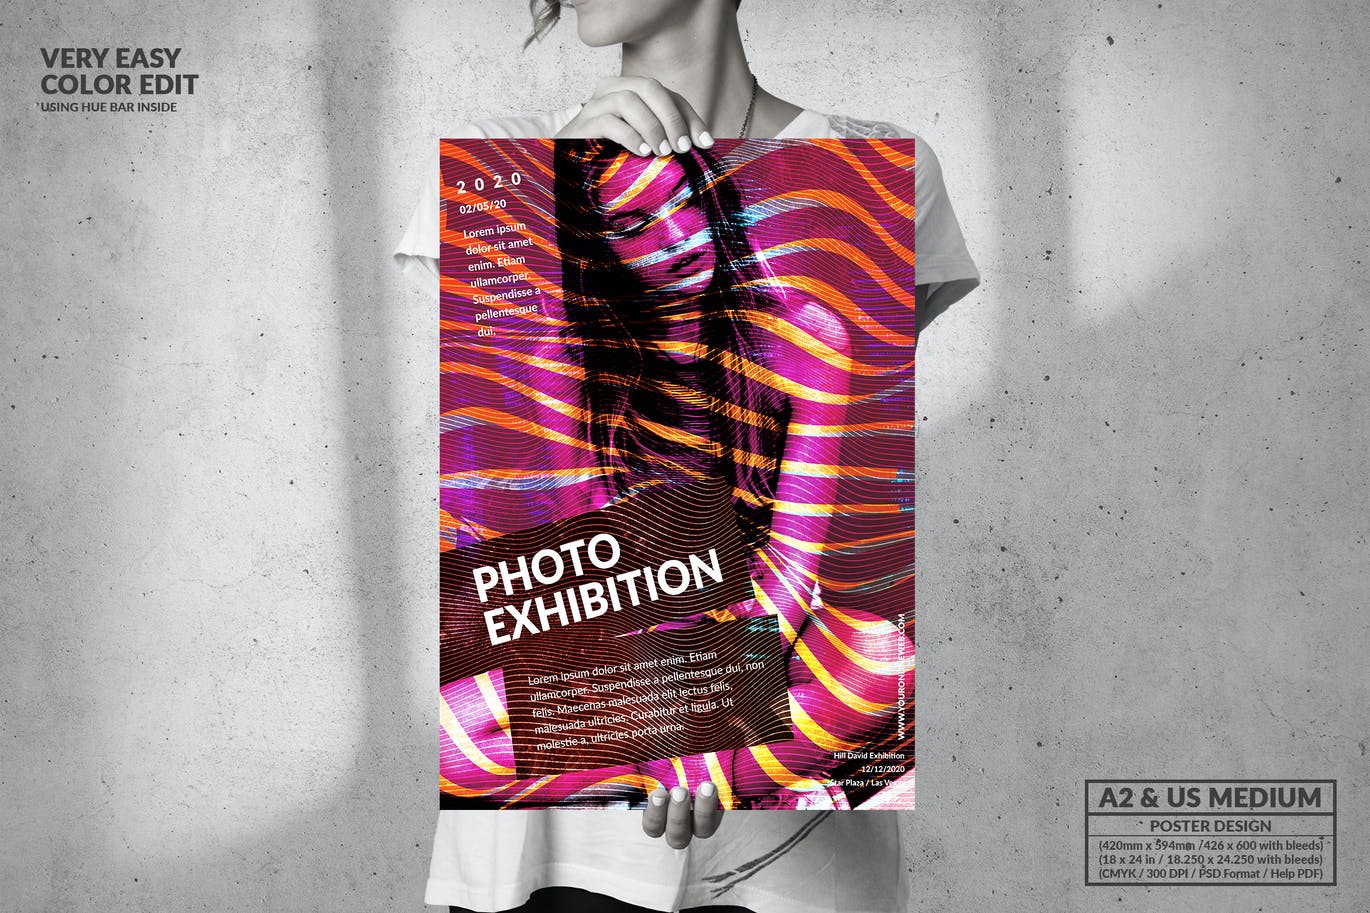 Photo Exhibition Event - Big Poster Design